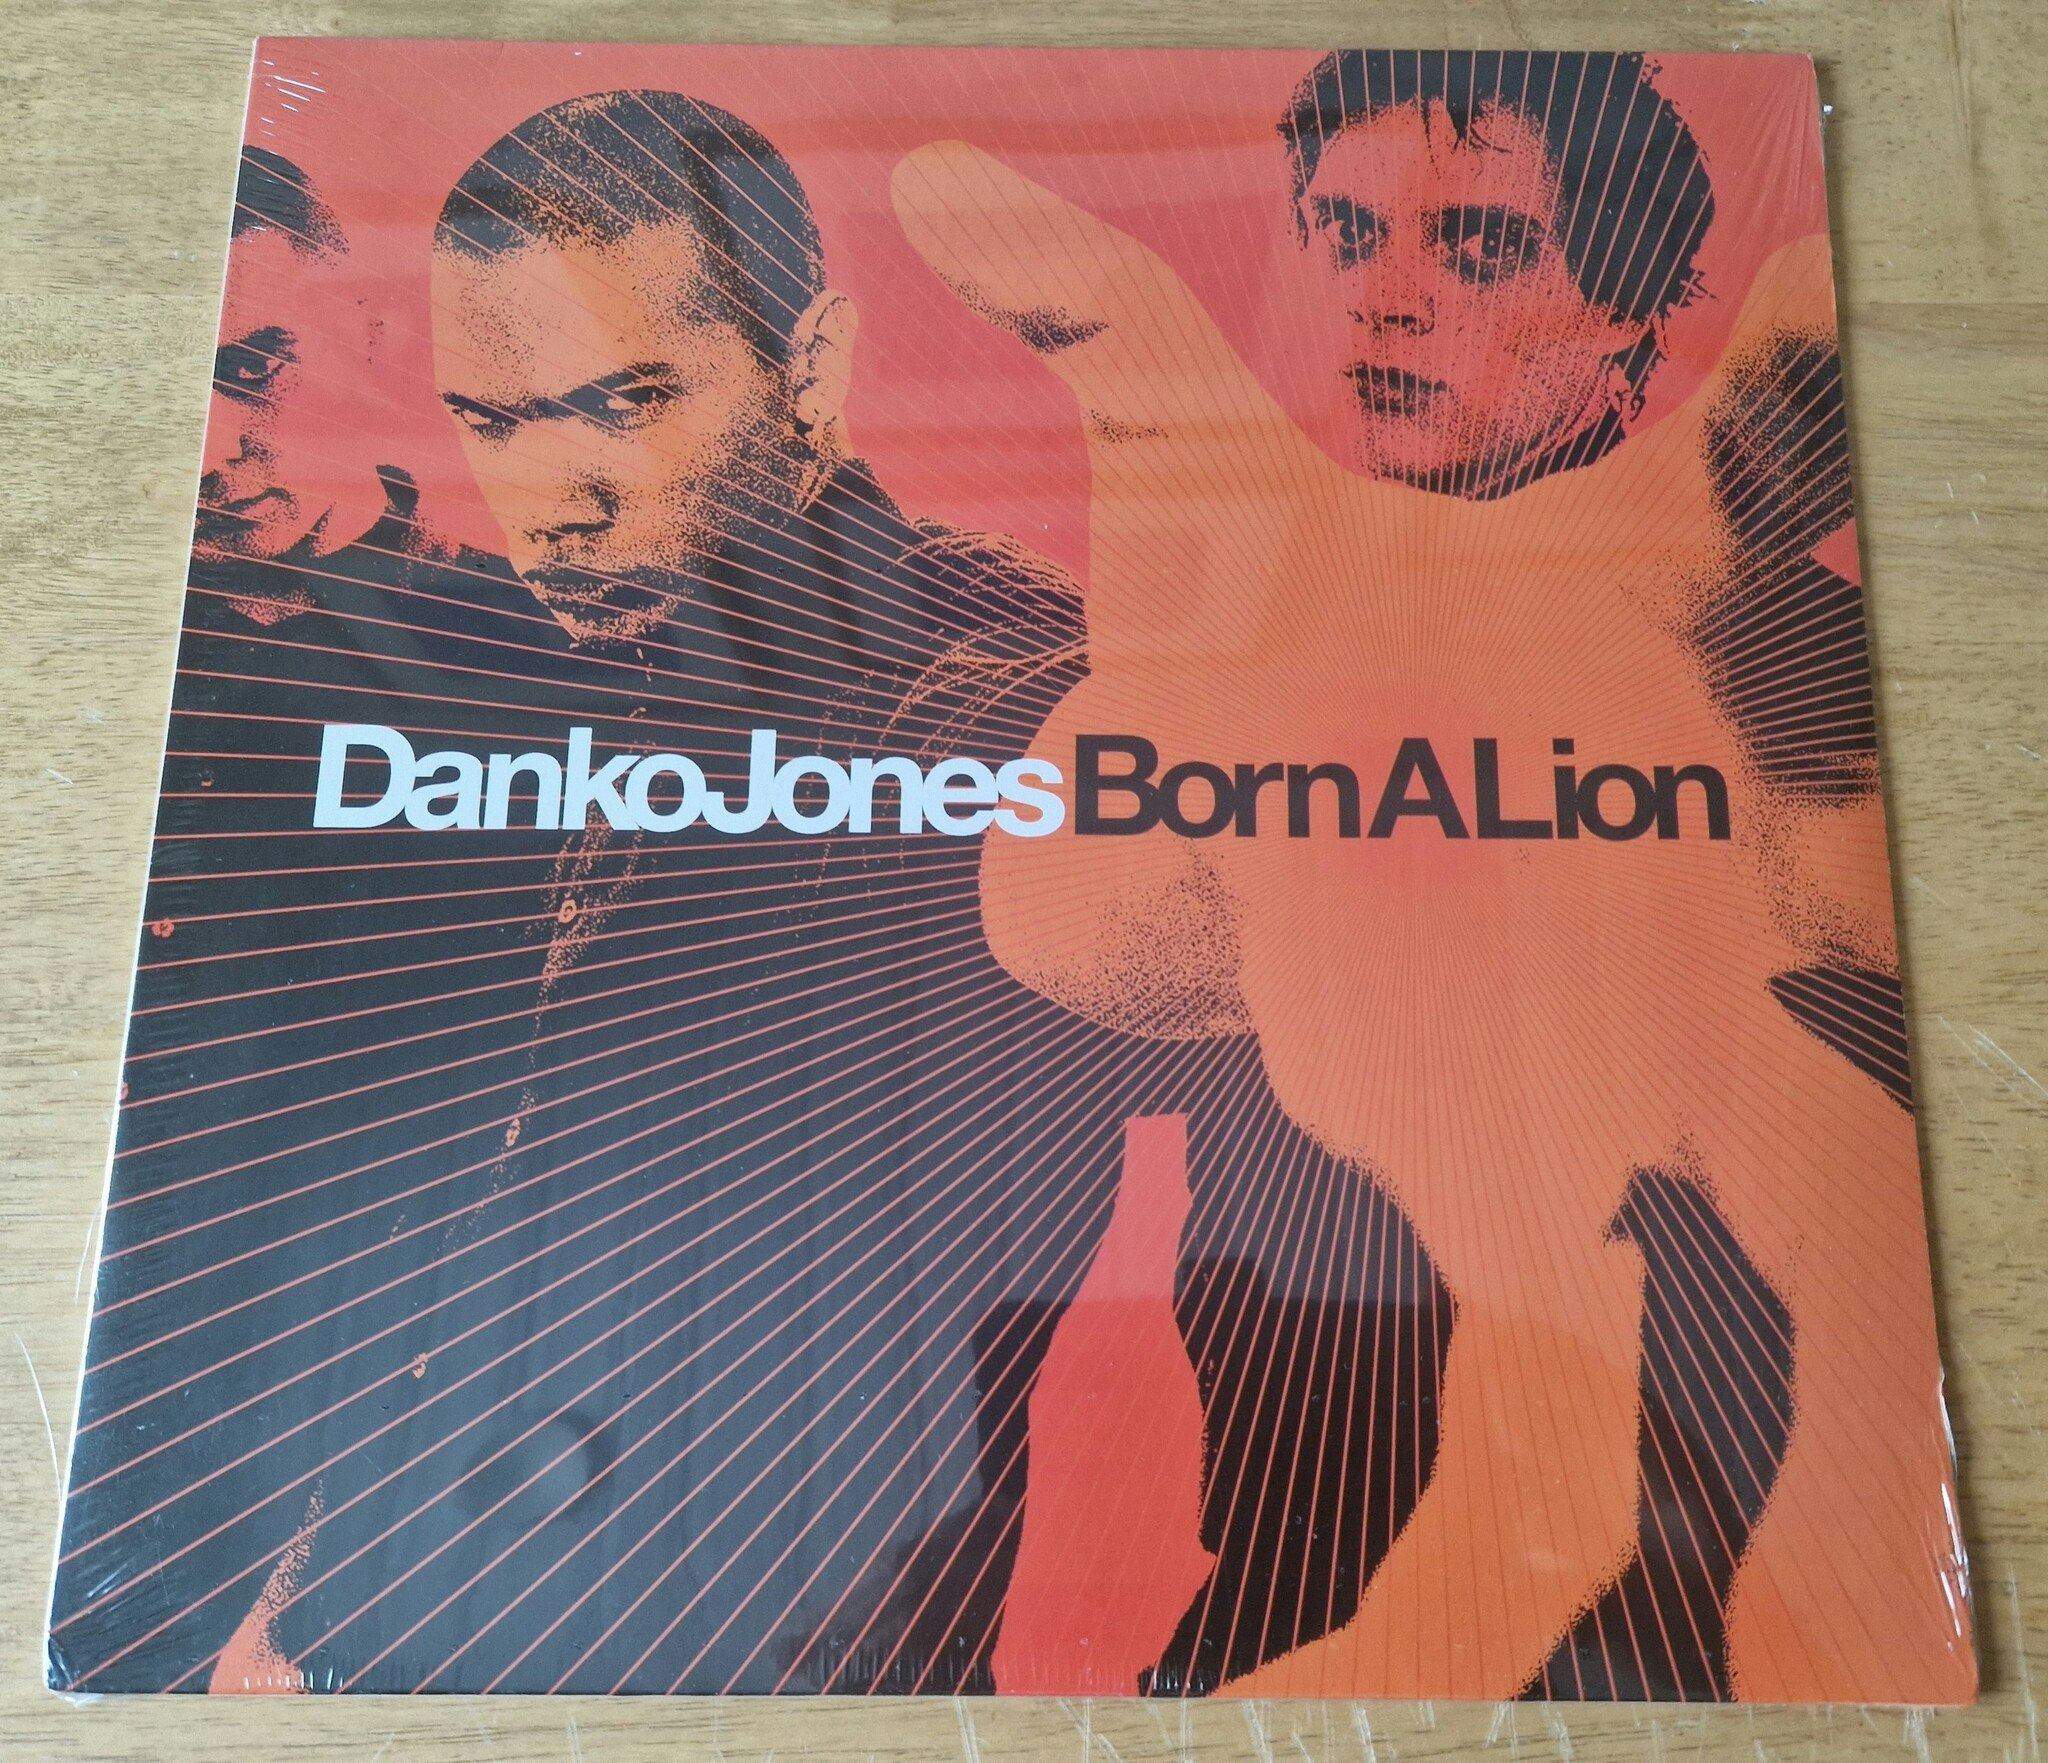 Danko Jones, Born a lion. Vinyl LP